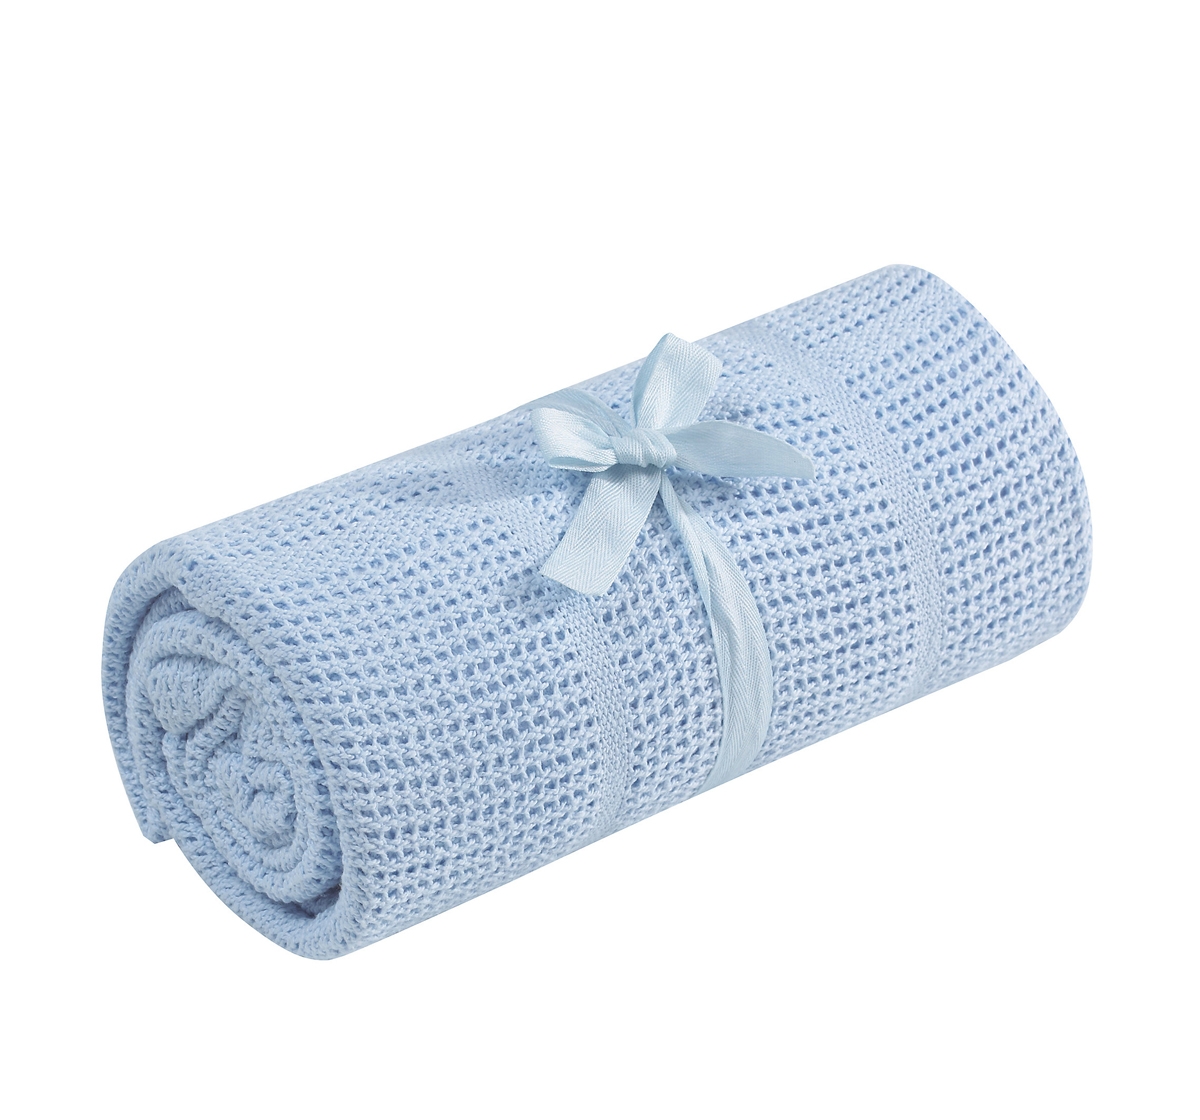 Blue Cot Or Cot Bed Cellular Cotton Blanket